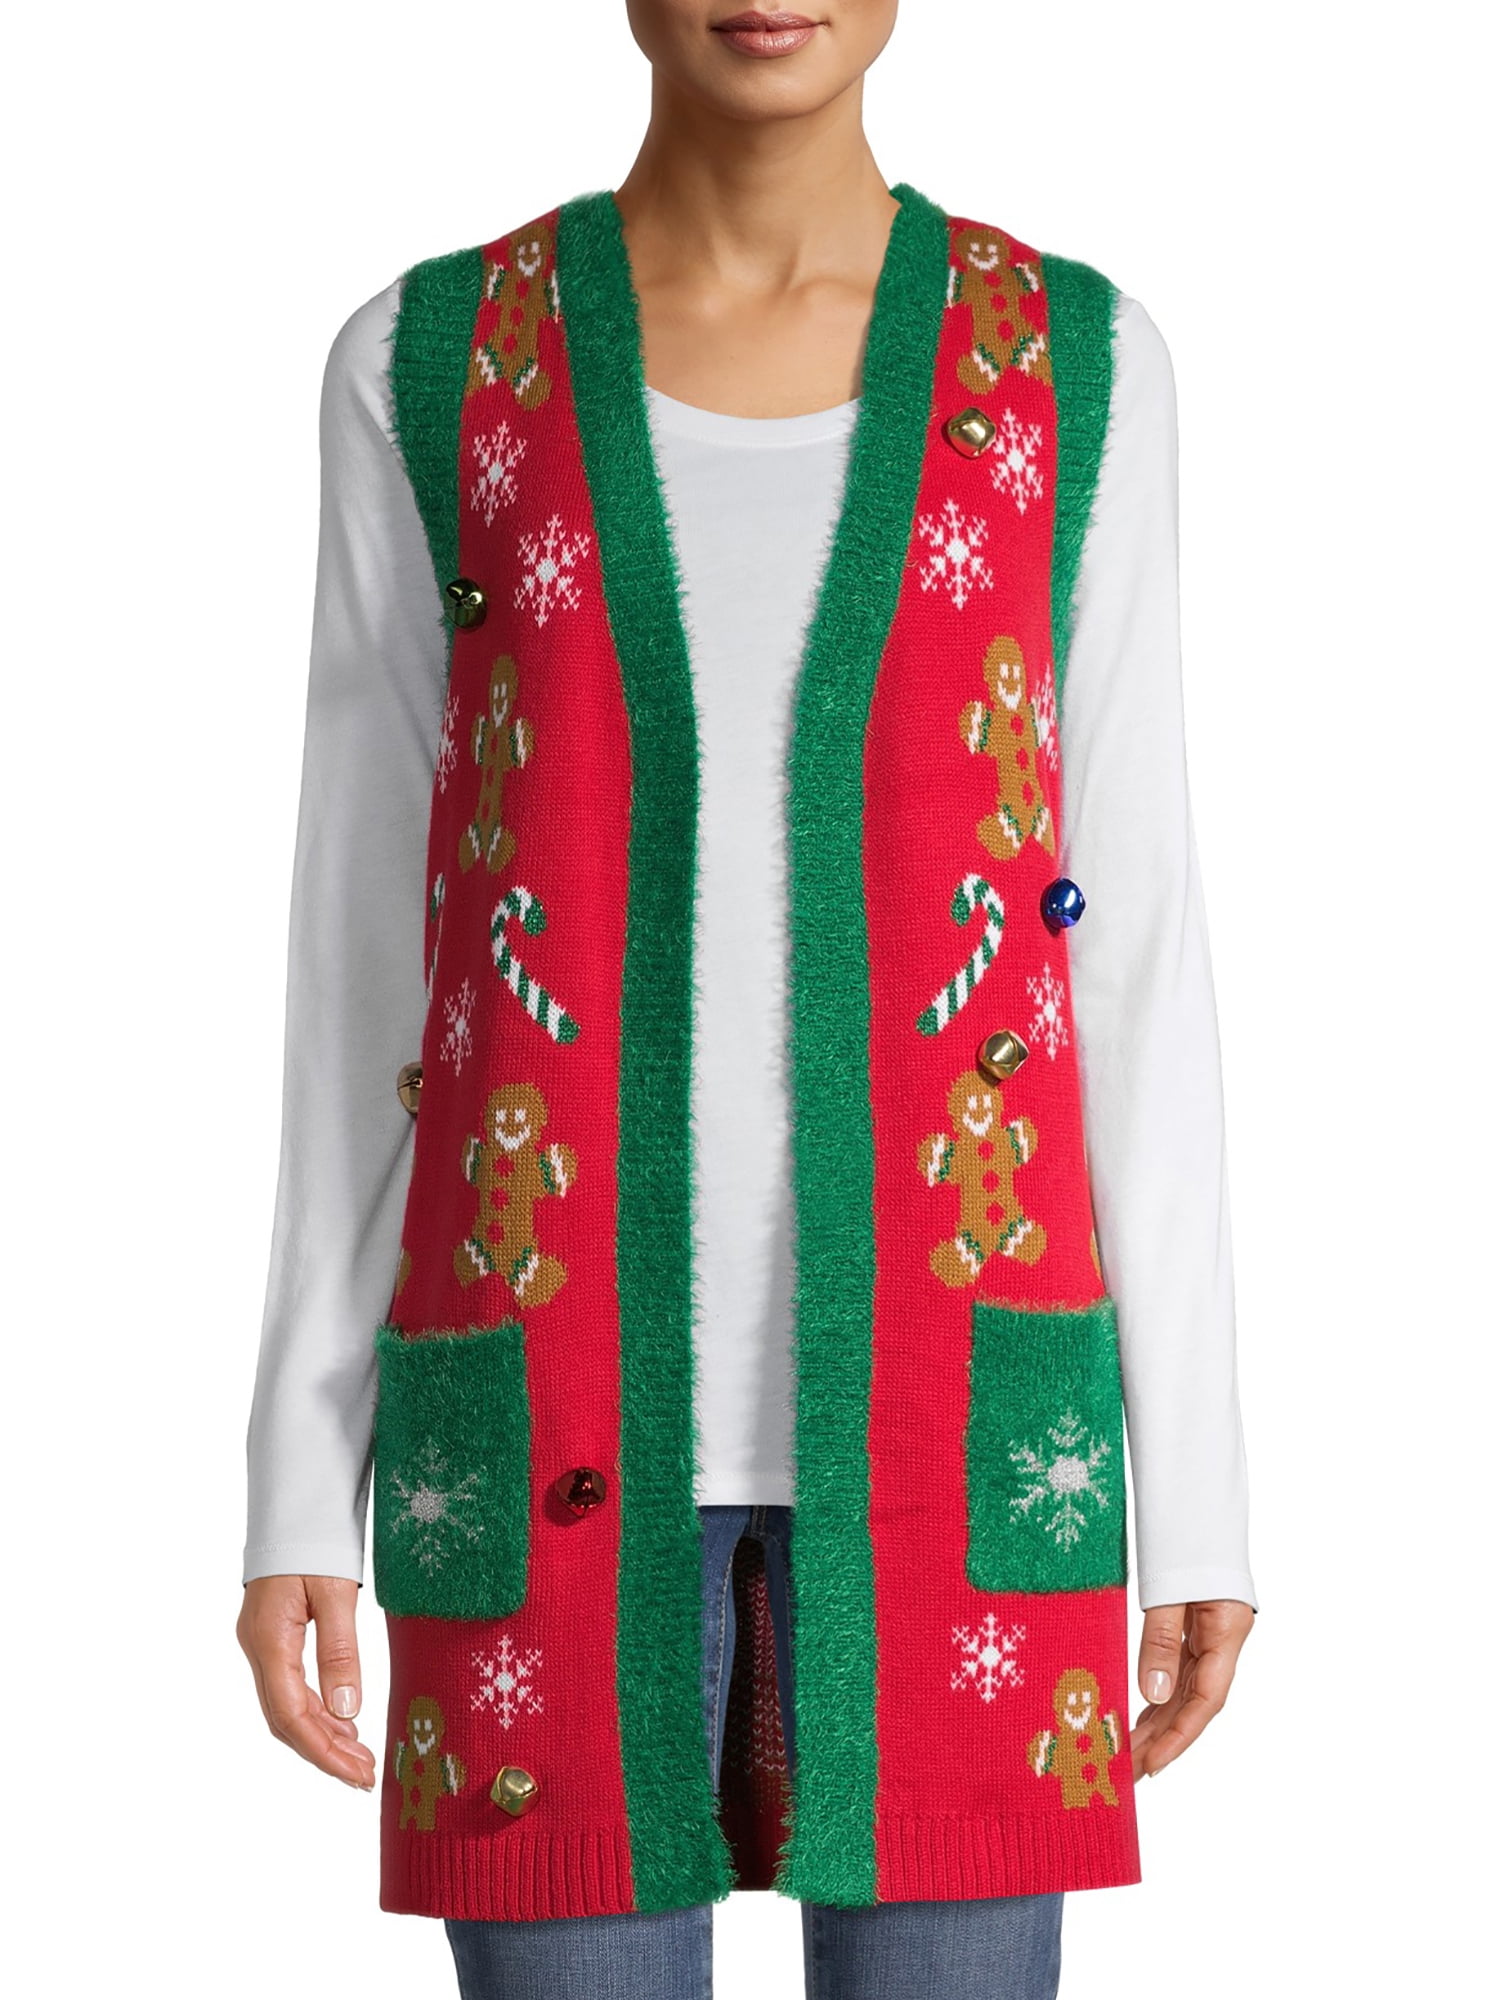 Holiday Time Women's Christmas Vest - Walmart.com